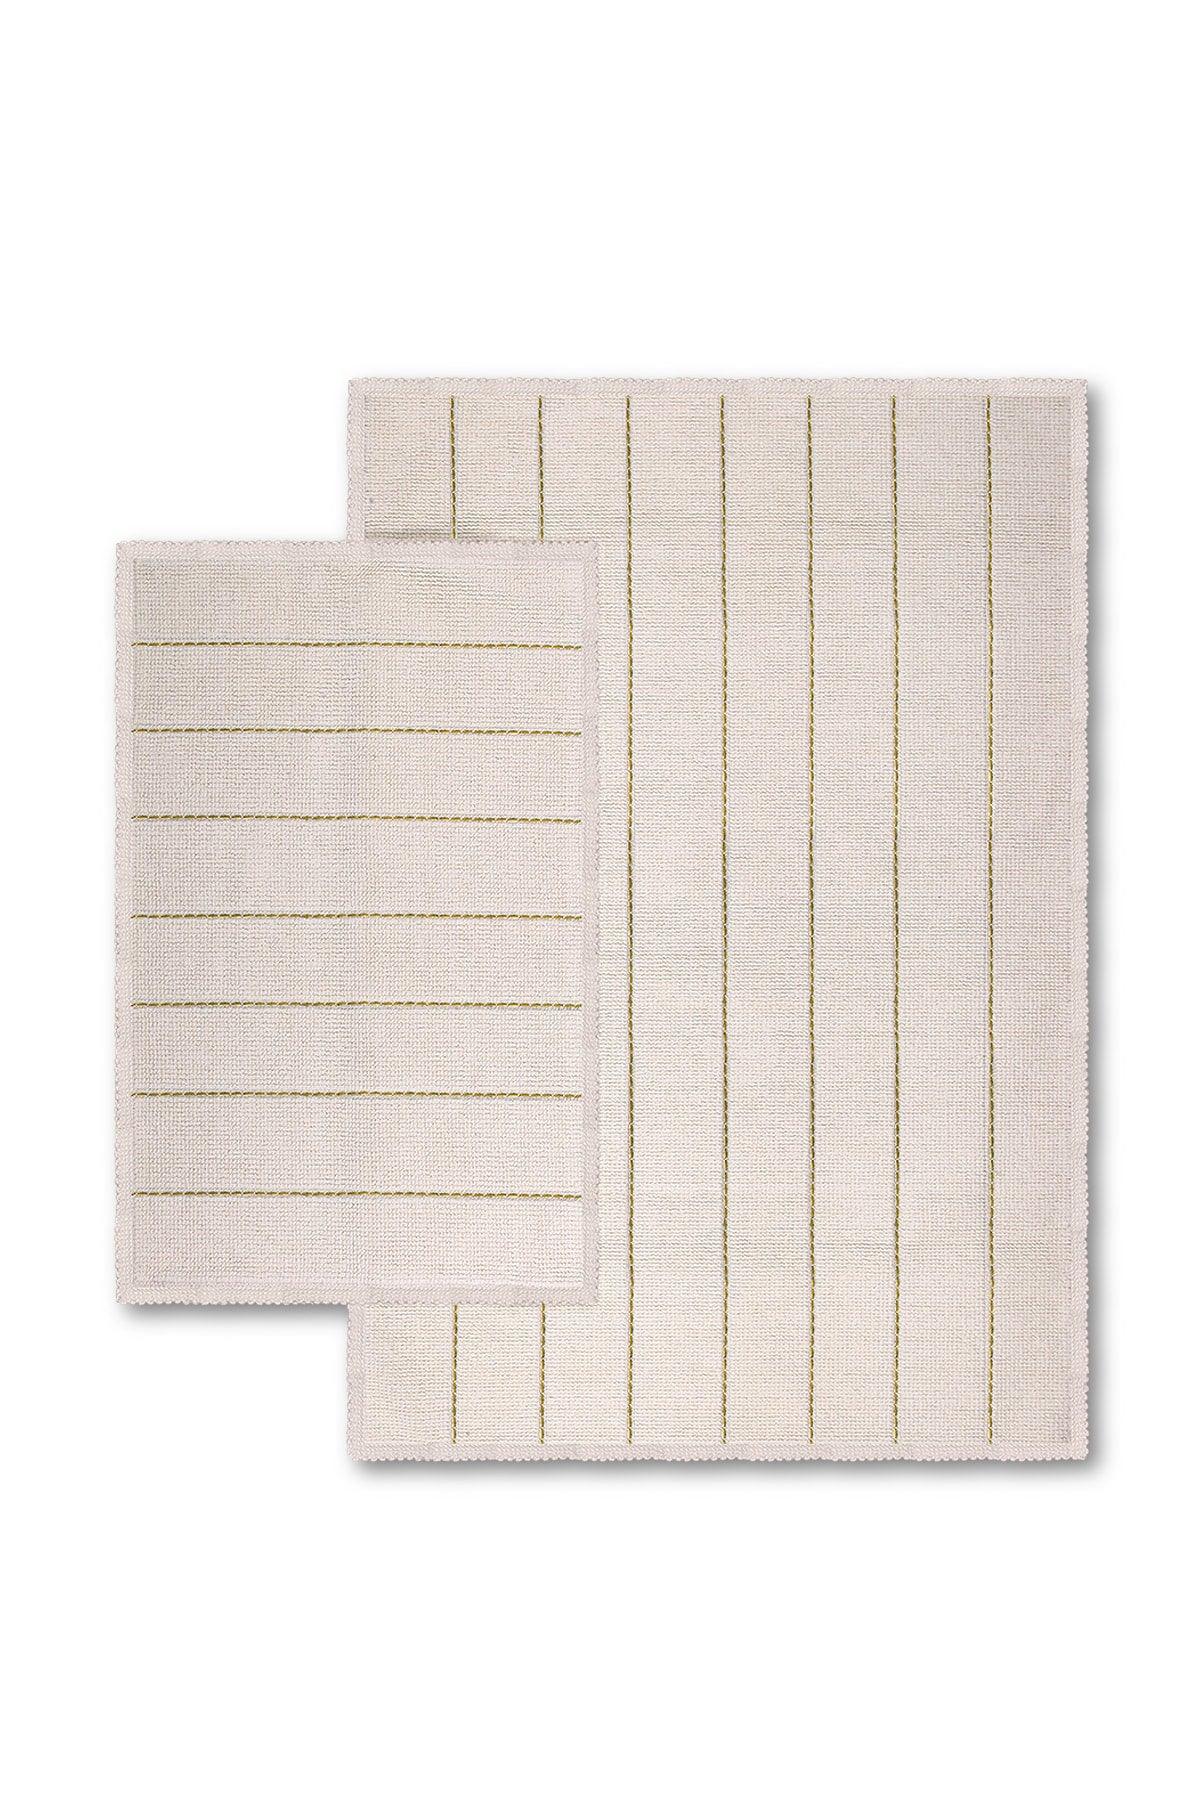 Basic Stripe Natural Cotton 2 Pcs Bathroom Rug Set 60x100 50x60 Cm Ecru/Yellow Striped - Swordslife